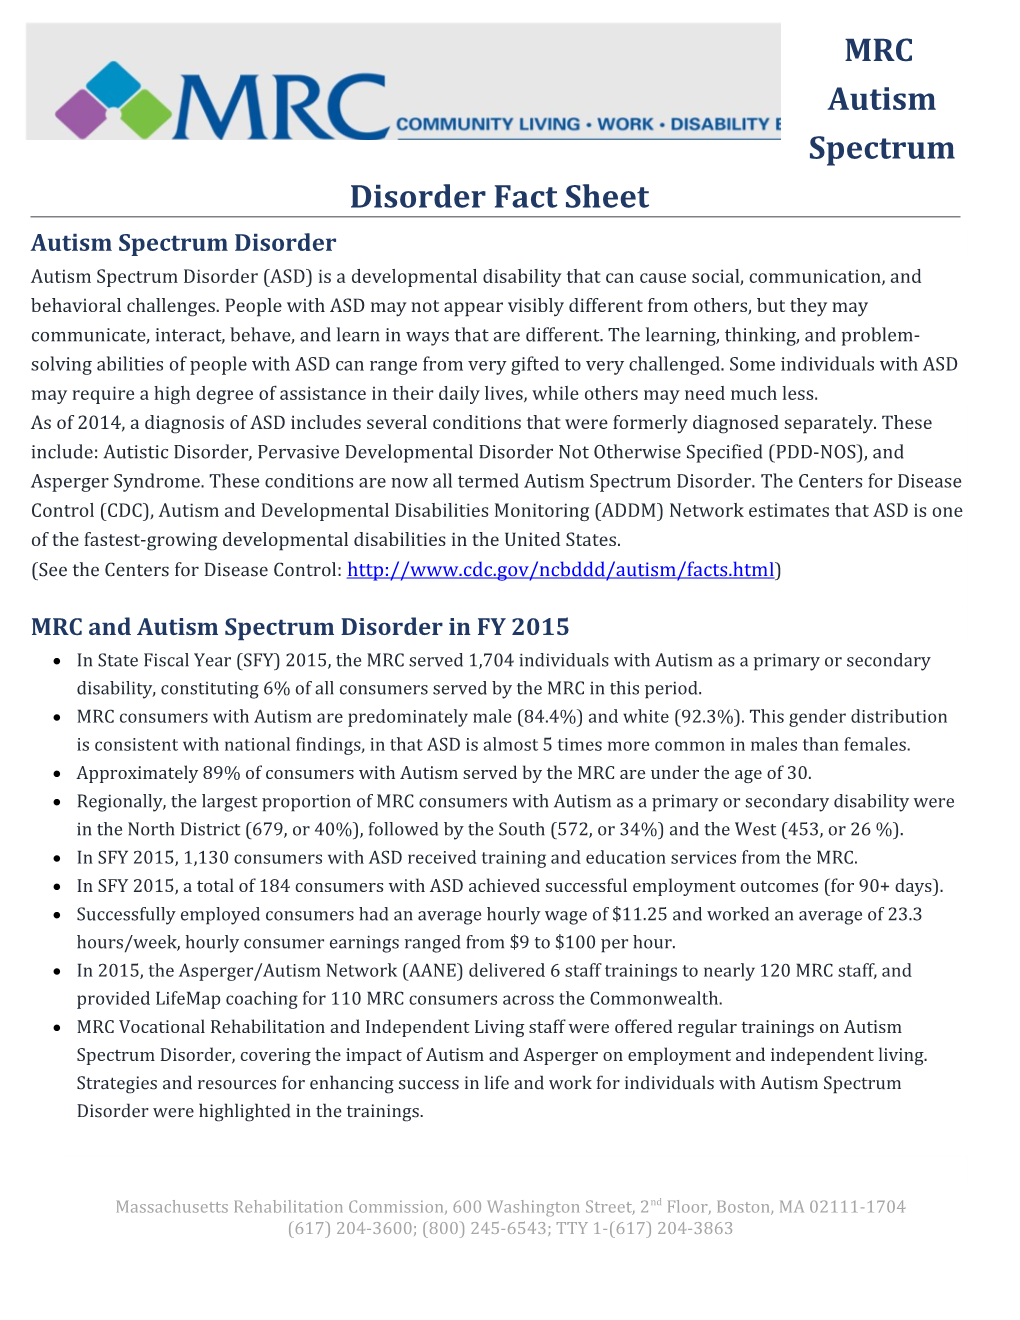 MRC Autism Spectrum Disorder Factsheet